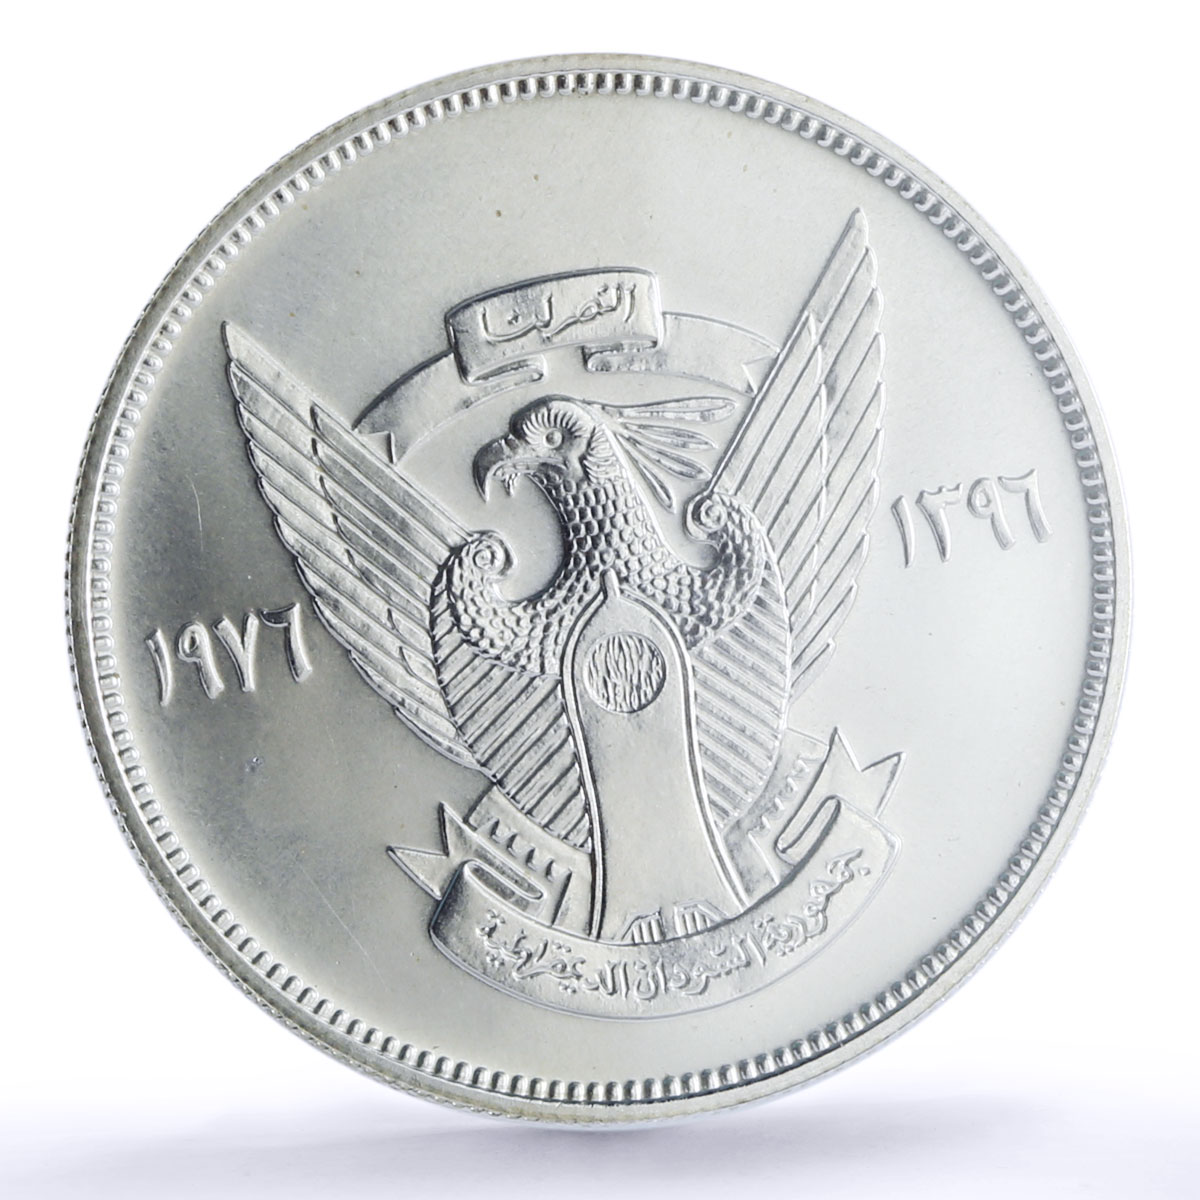 Sudan 2 1/2 pounds Conservation Shoebill Stork MS67 PCGS silver coin 1976